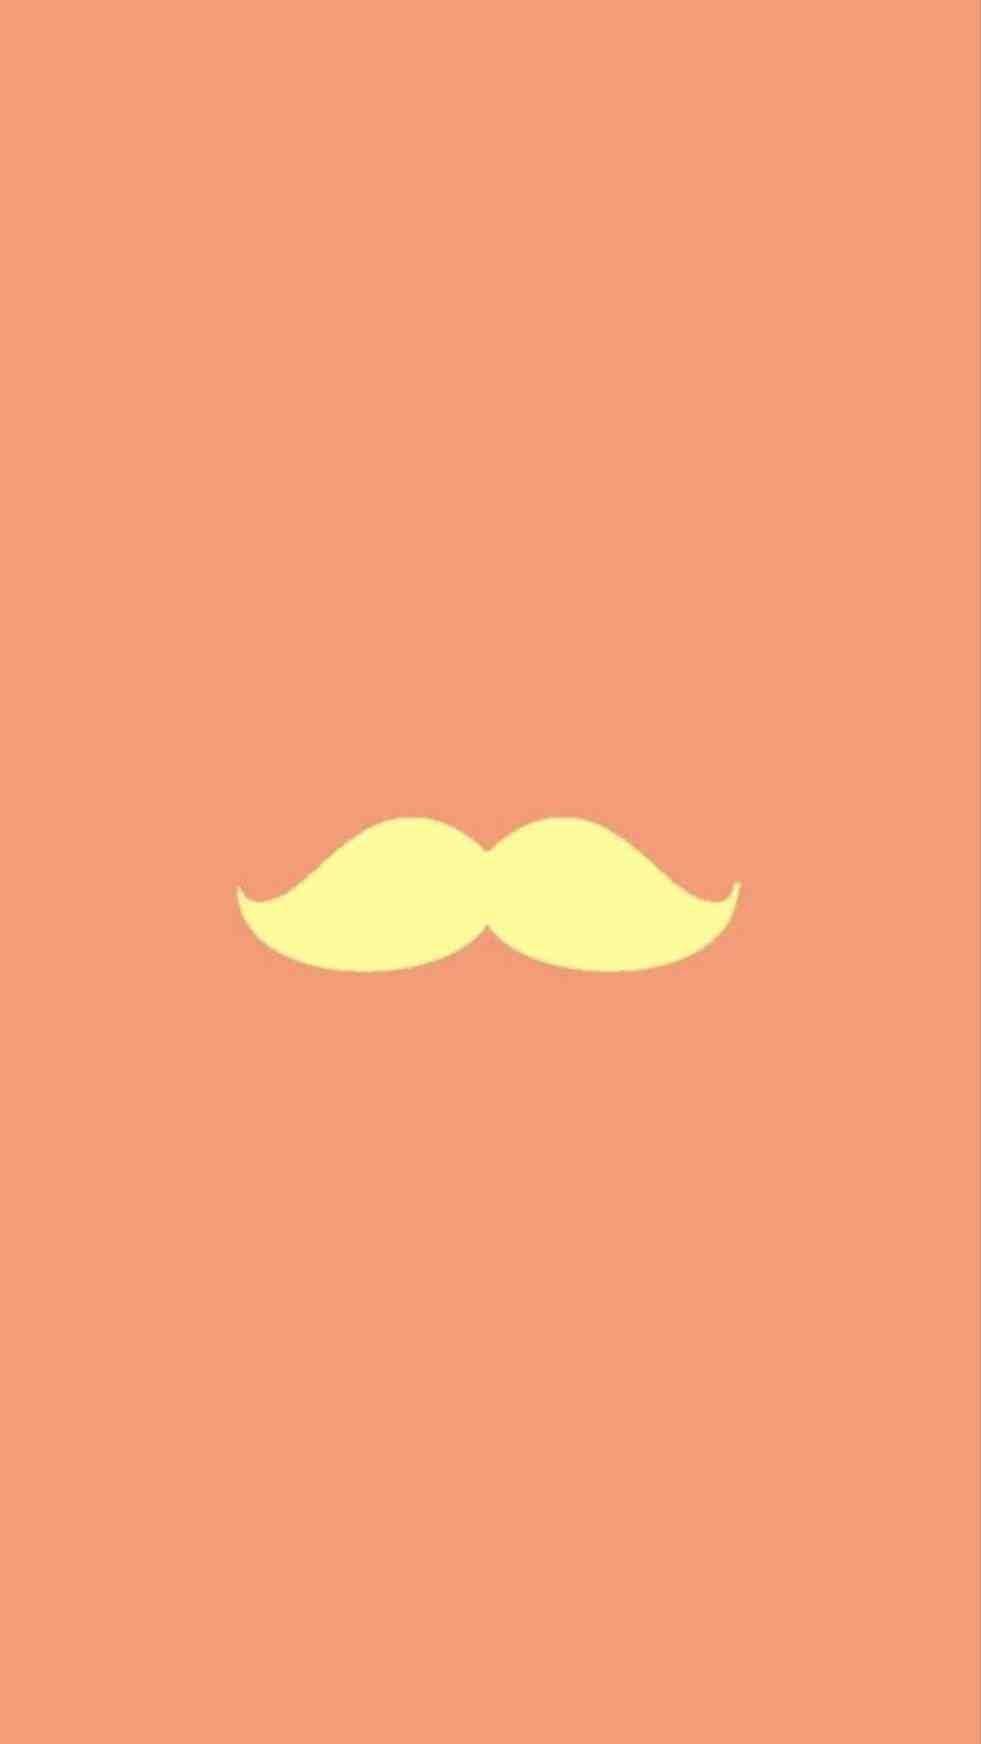 Cute Mustache iPhone Wallpapers - Top Free Cute Mustache iPhone ...